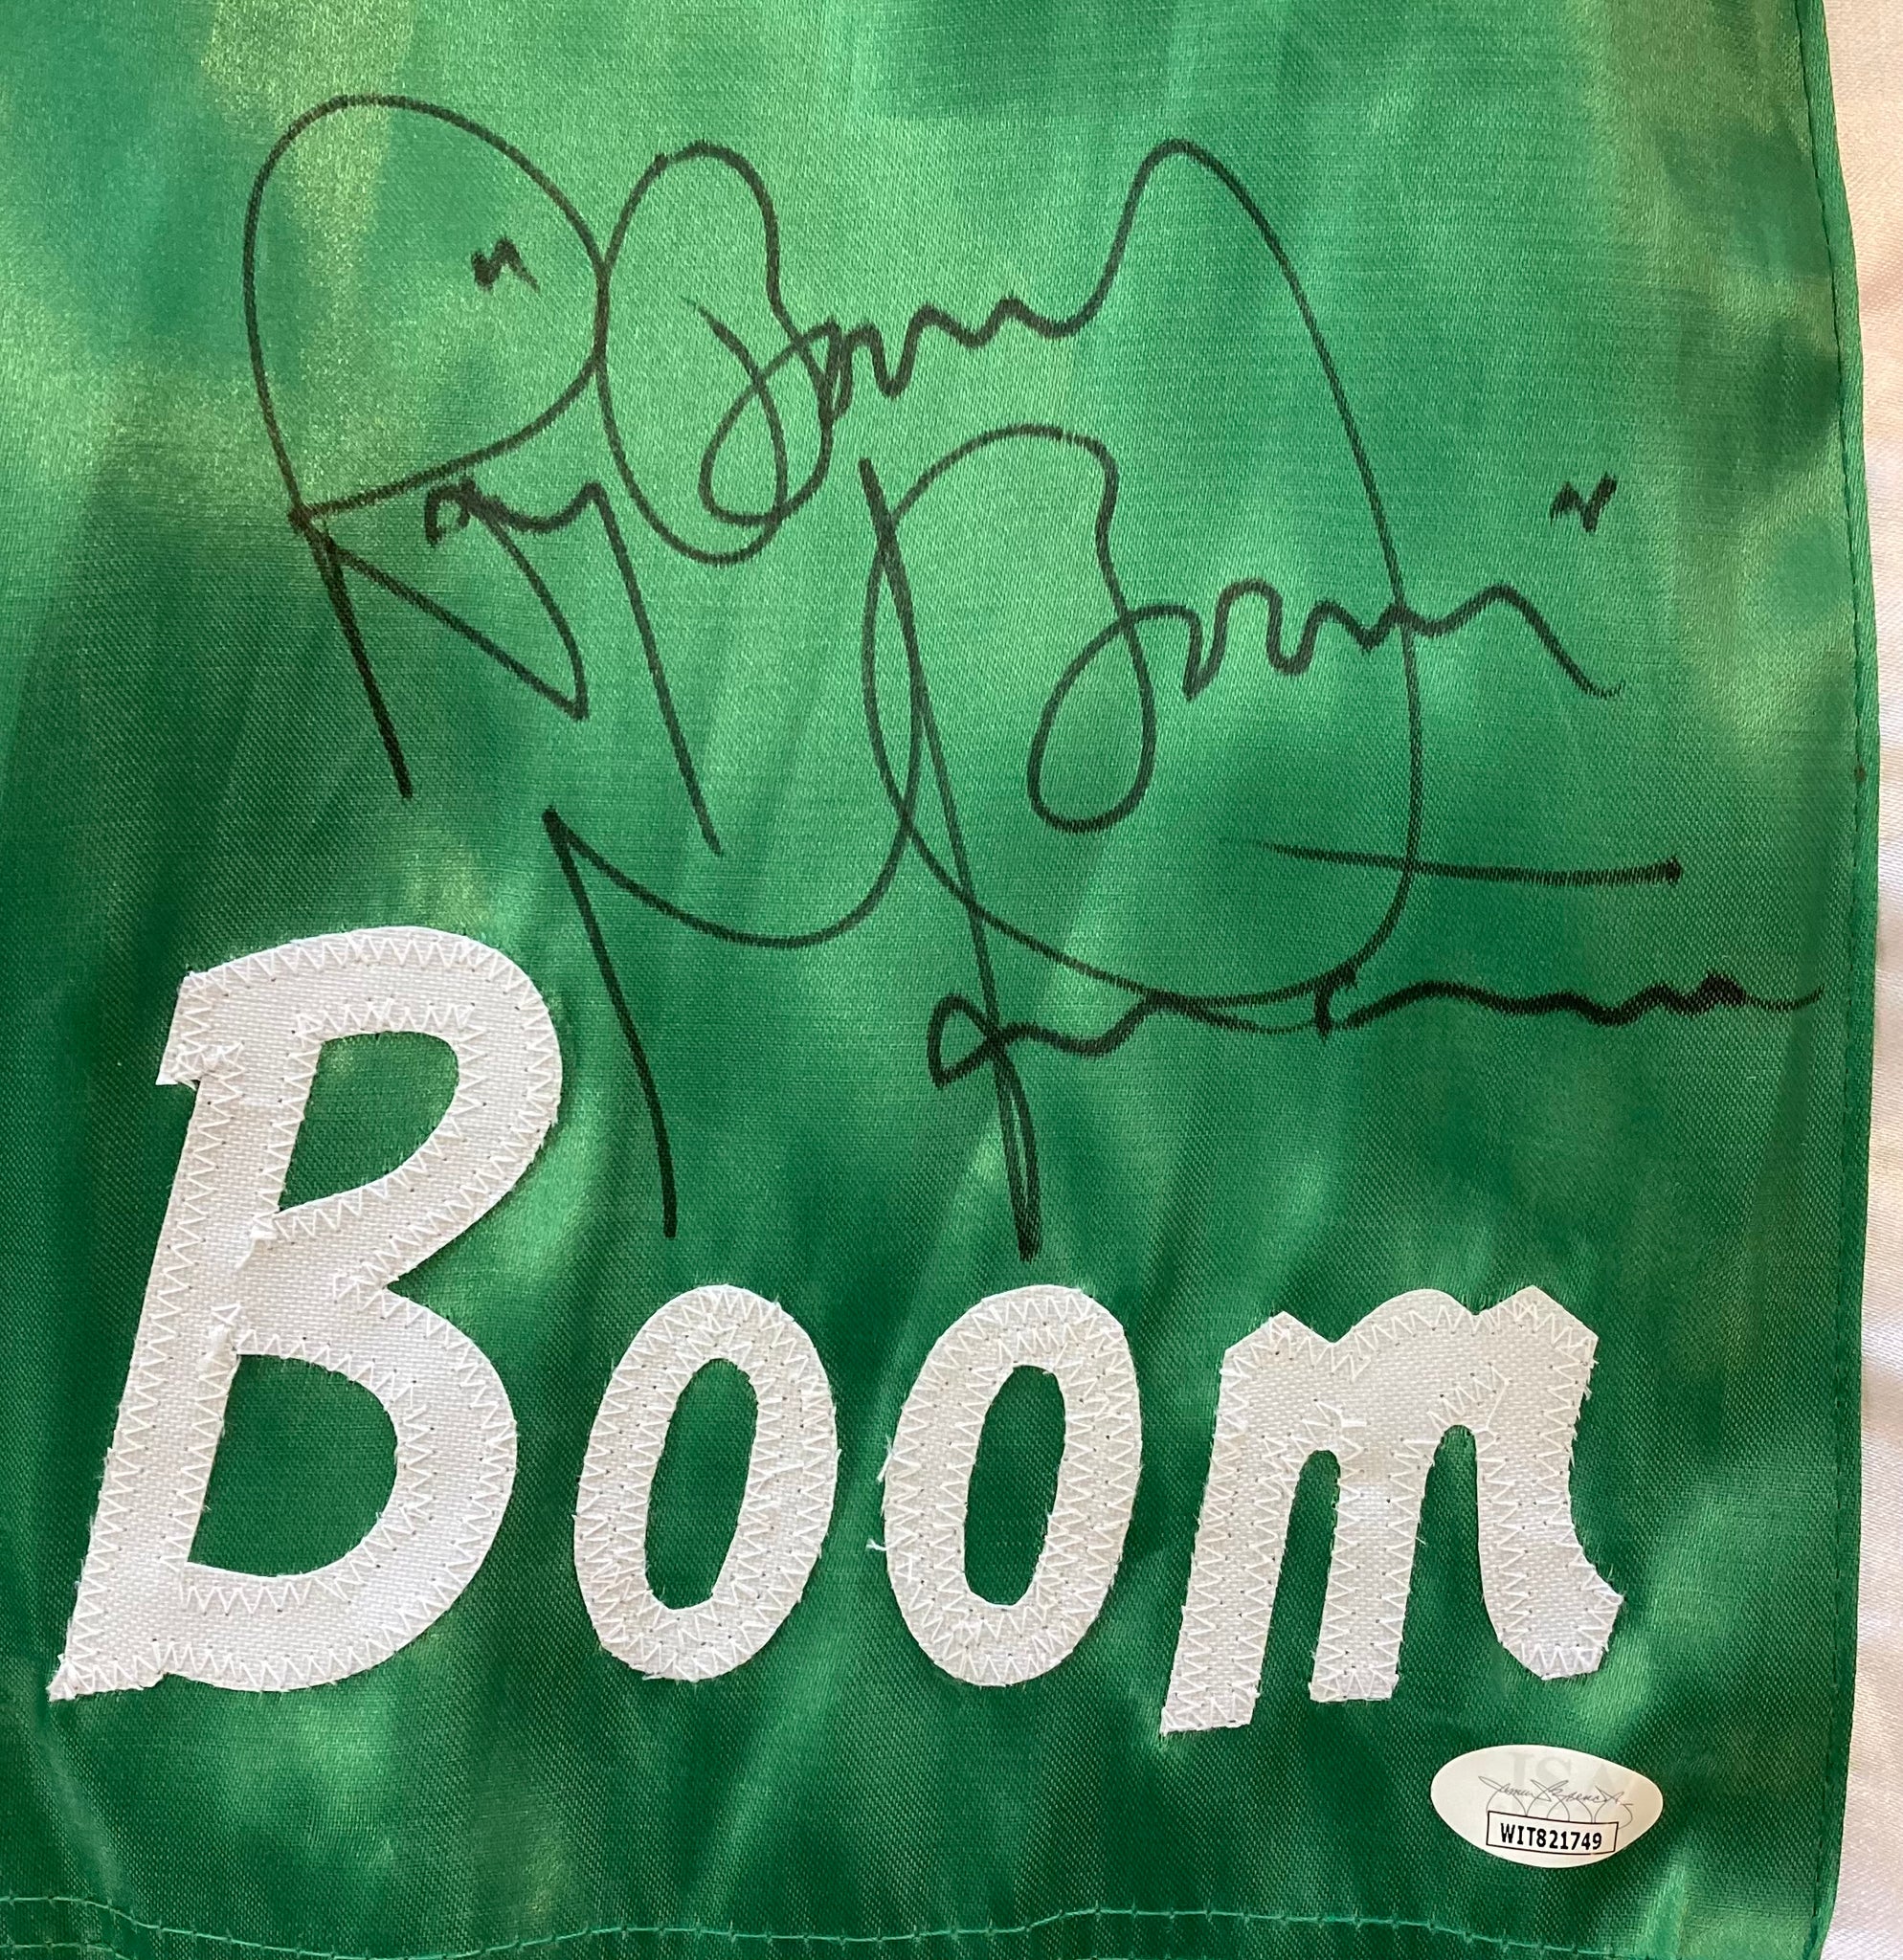 Ray Boom Boom Mancini Signed 8x10 Photo (JSA COA)